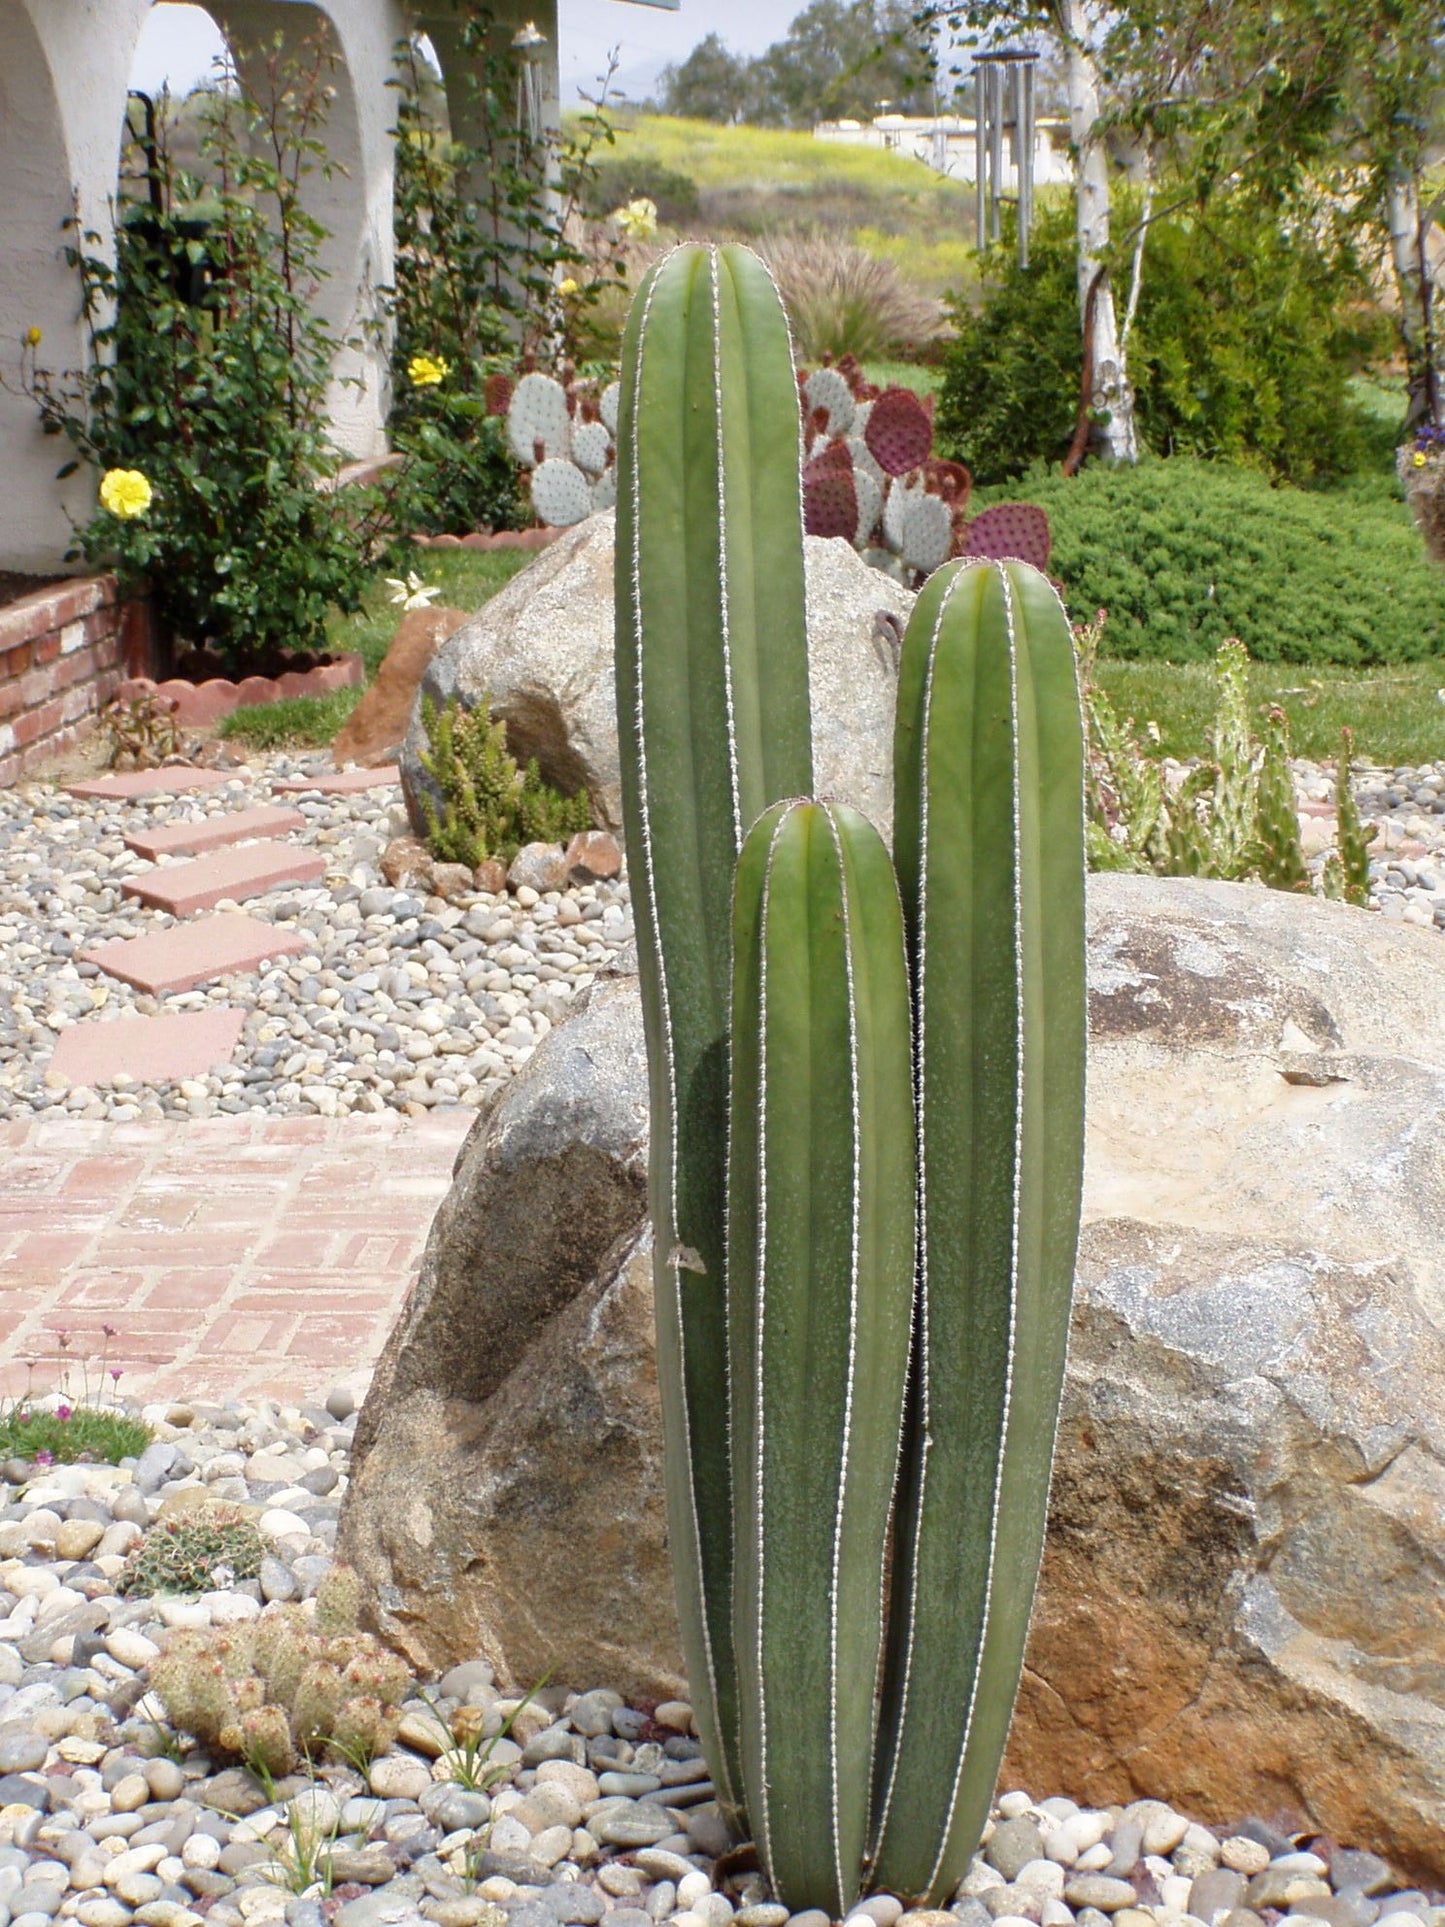 Mexican Fence Post Cactus  (Pachycereus marginatus) - 3.5"